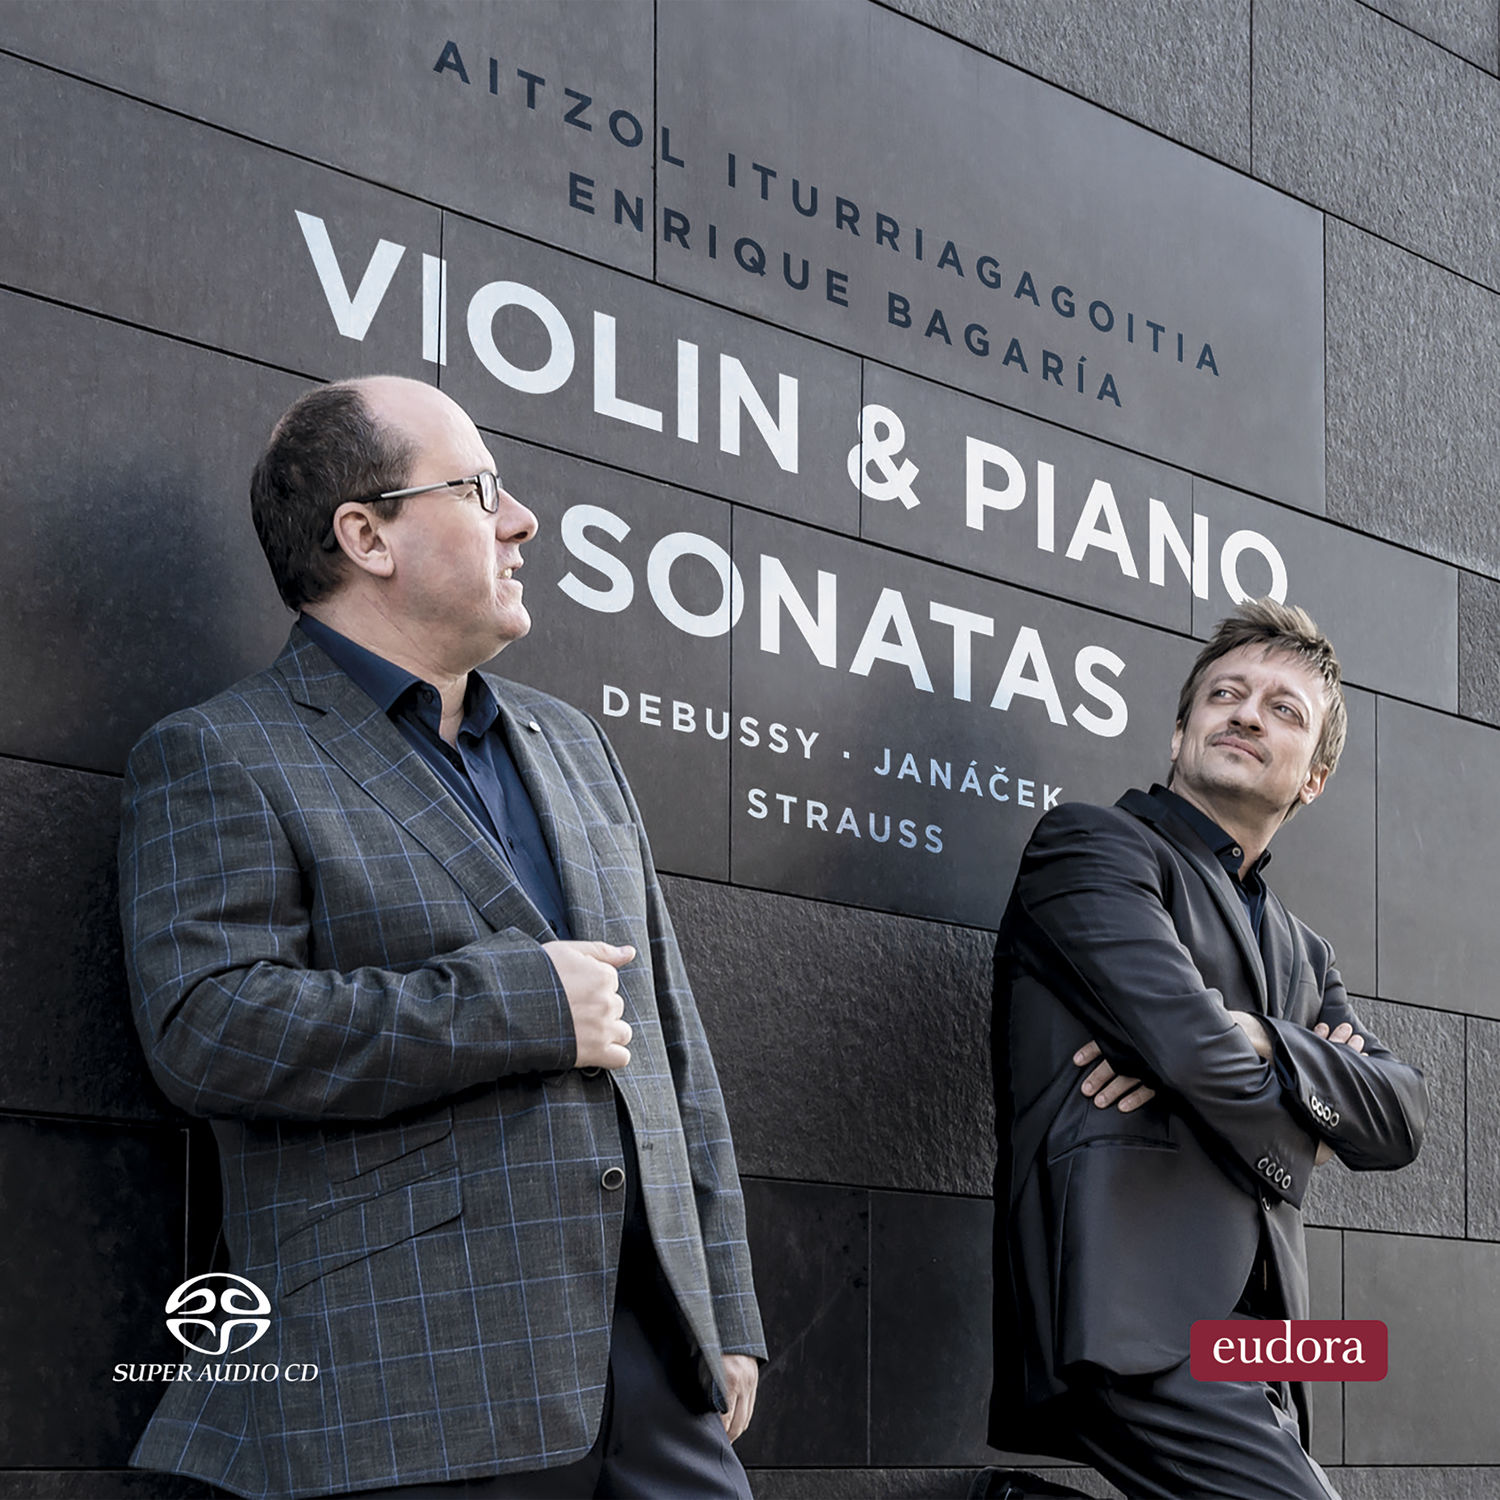 Aitzol Iturriagagoitia – Debussy, Janacek, Strauss- Violin & Piano Sonatas